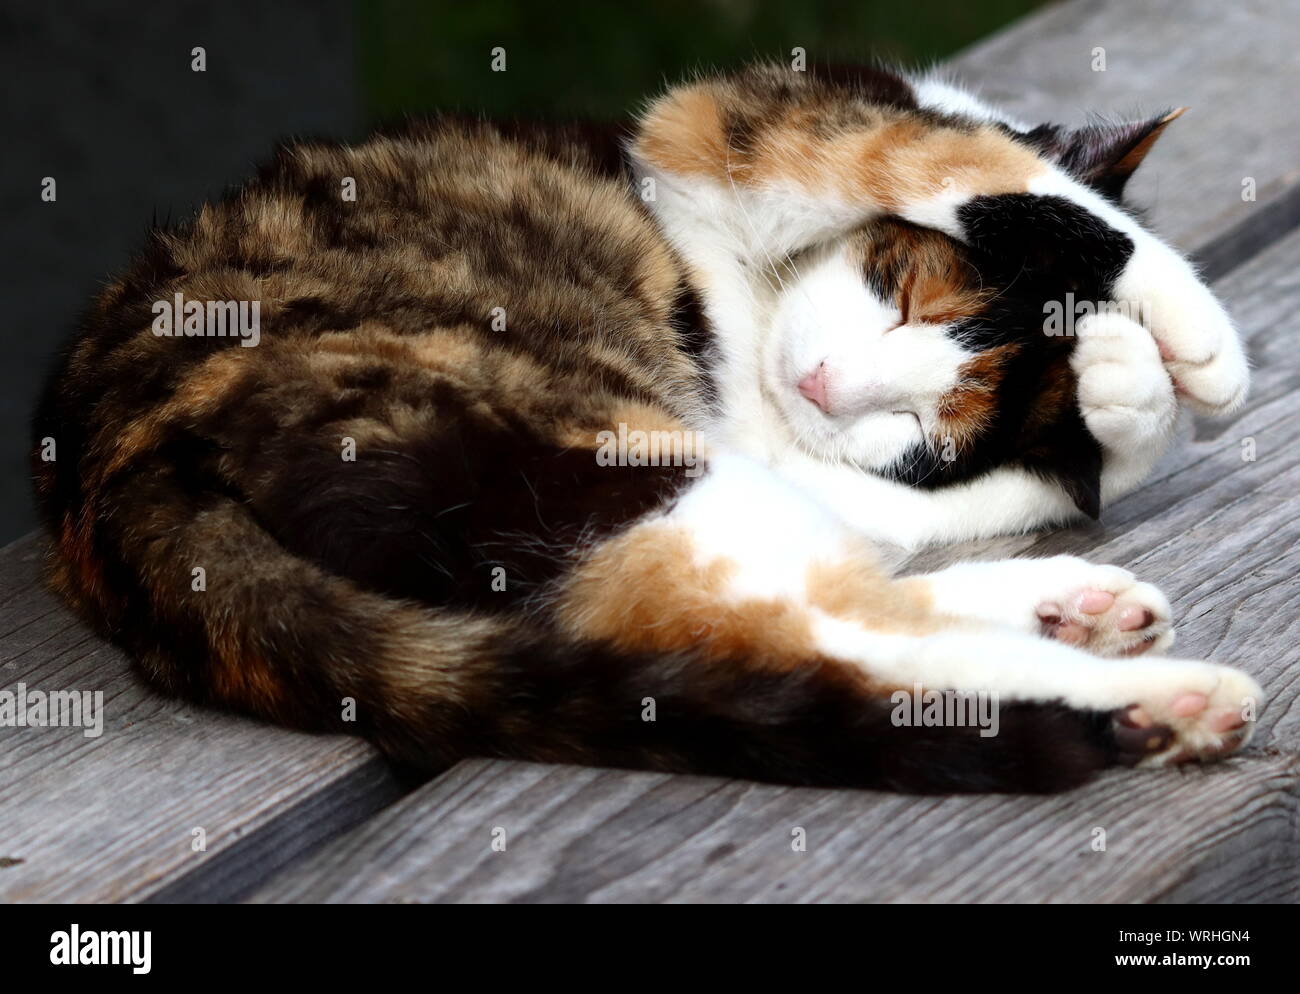 Zweigniederlassungen putzende Katze liegend auf einer Bank, Pfoten über dem Kopf | Katzenwäsche * Lissage cat allongé sur un banc avec les pieds au-dessus de sa tête | Cat's lick Banque D'Images